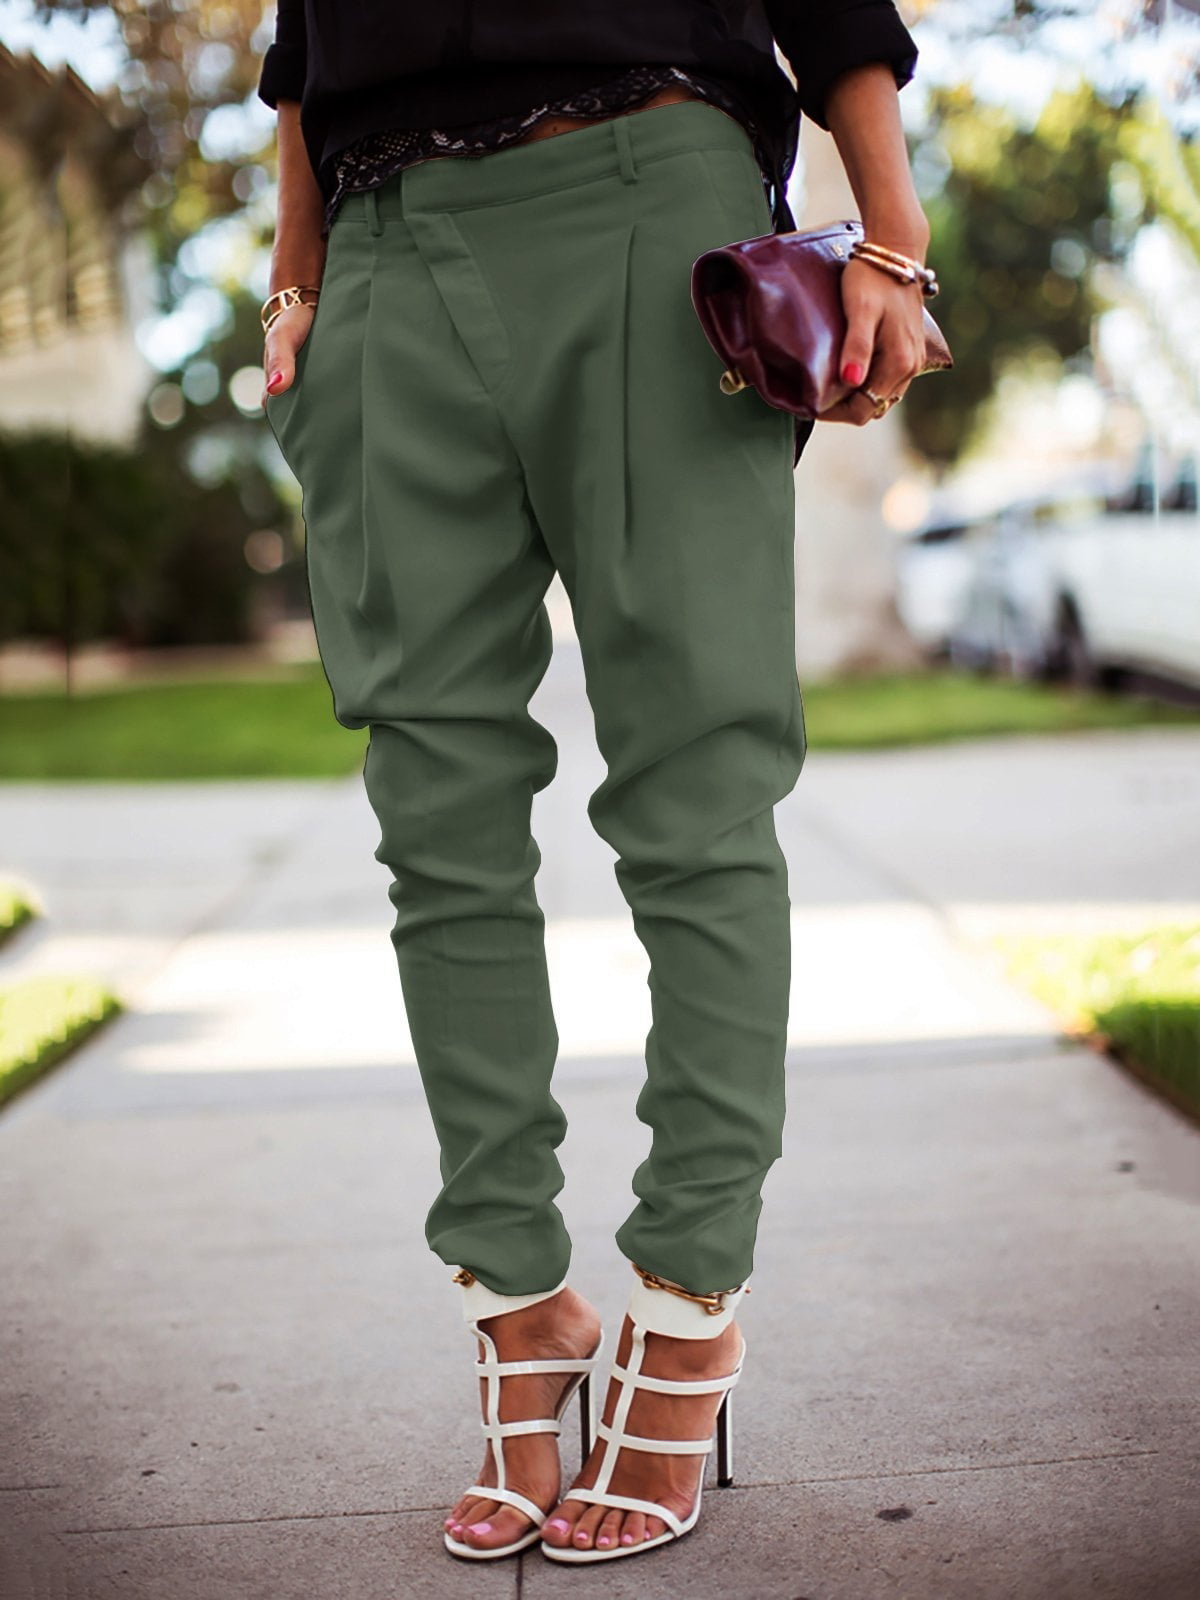 SySea Women Solid Color Harem Pants Casual Slim Fit